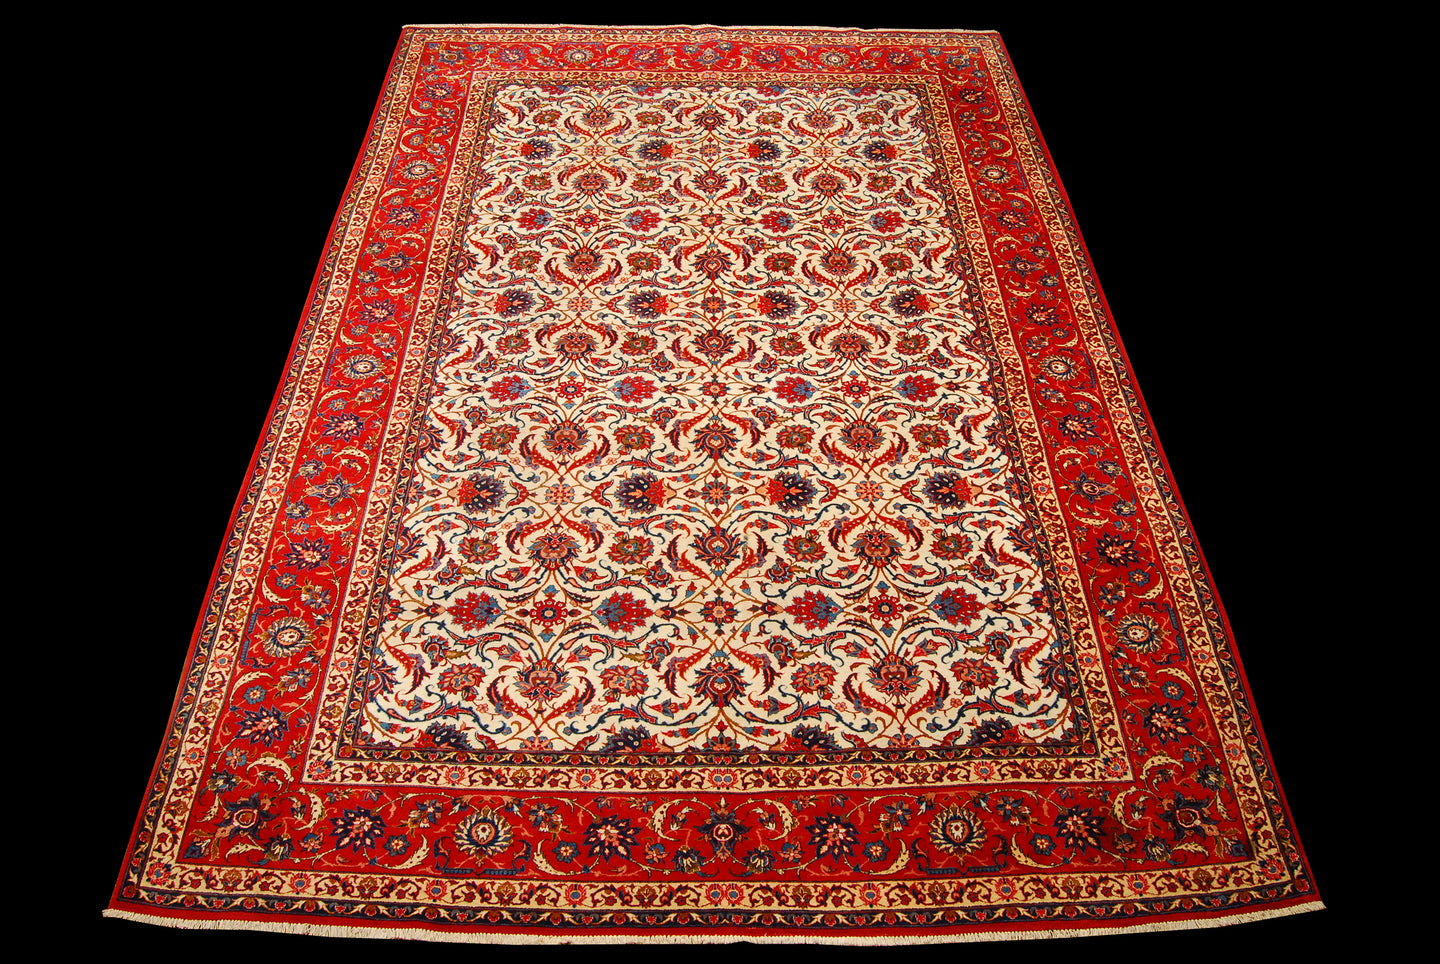 Authentic original hand knotted carpet 357x247 CM